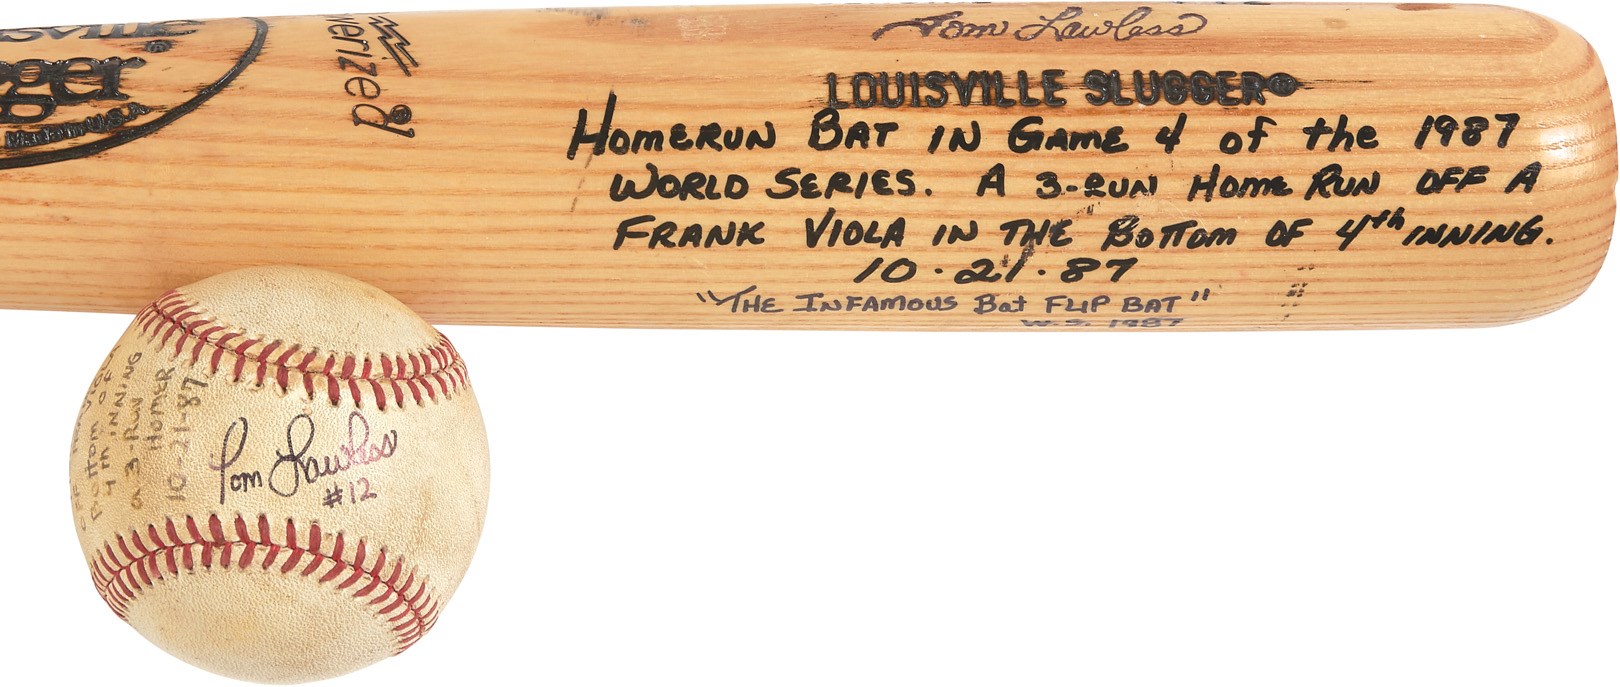 - 1987 World Series Tom Lawless Game Used "Bat Flip" Home Run Bat & Ball (Photo-Matched, Lawless LOA)